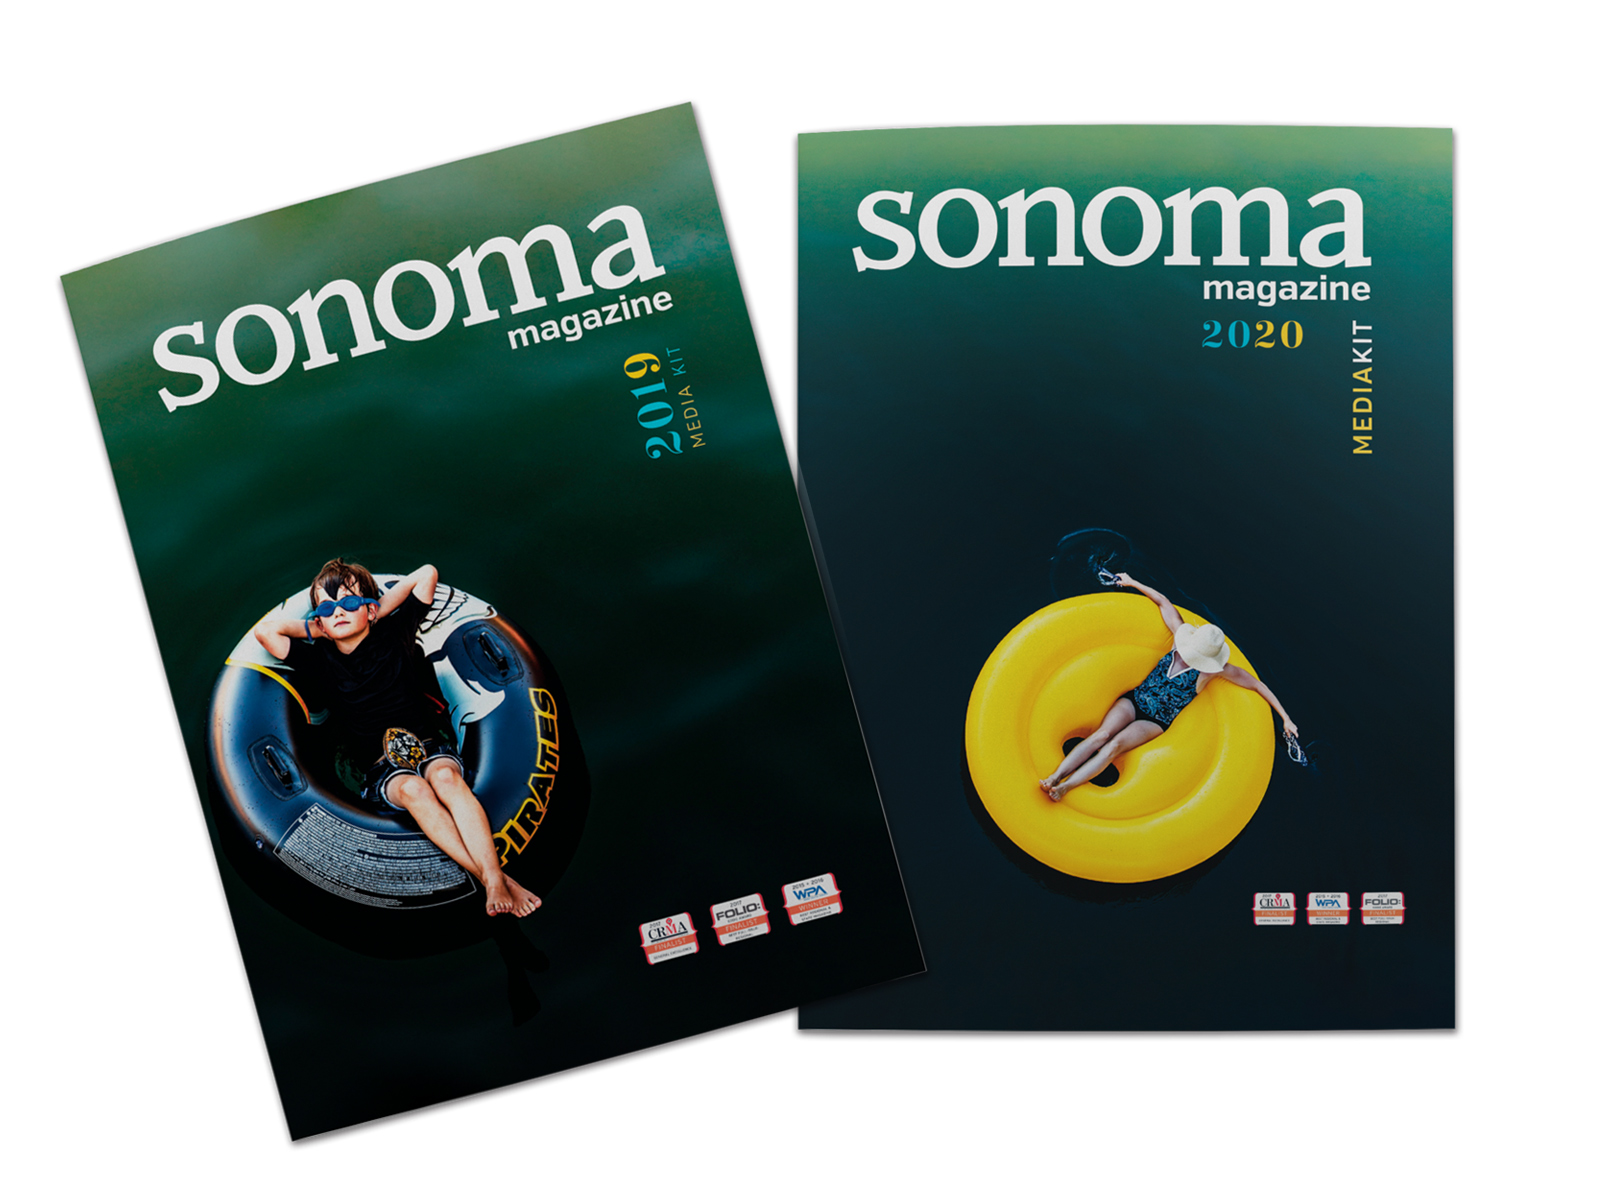 Sonoma Magazines 2019 & 2020 covers